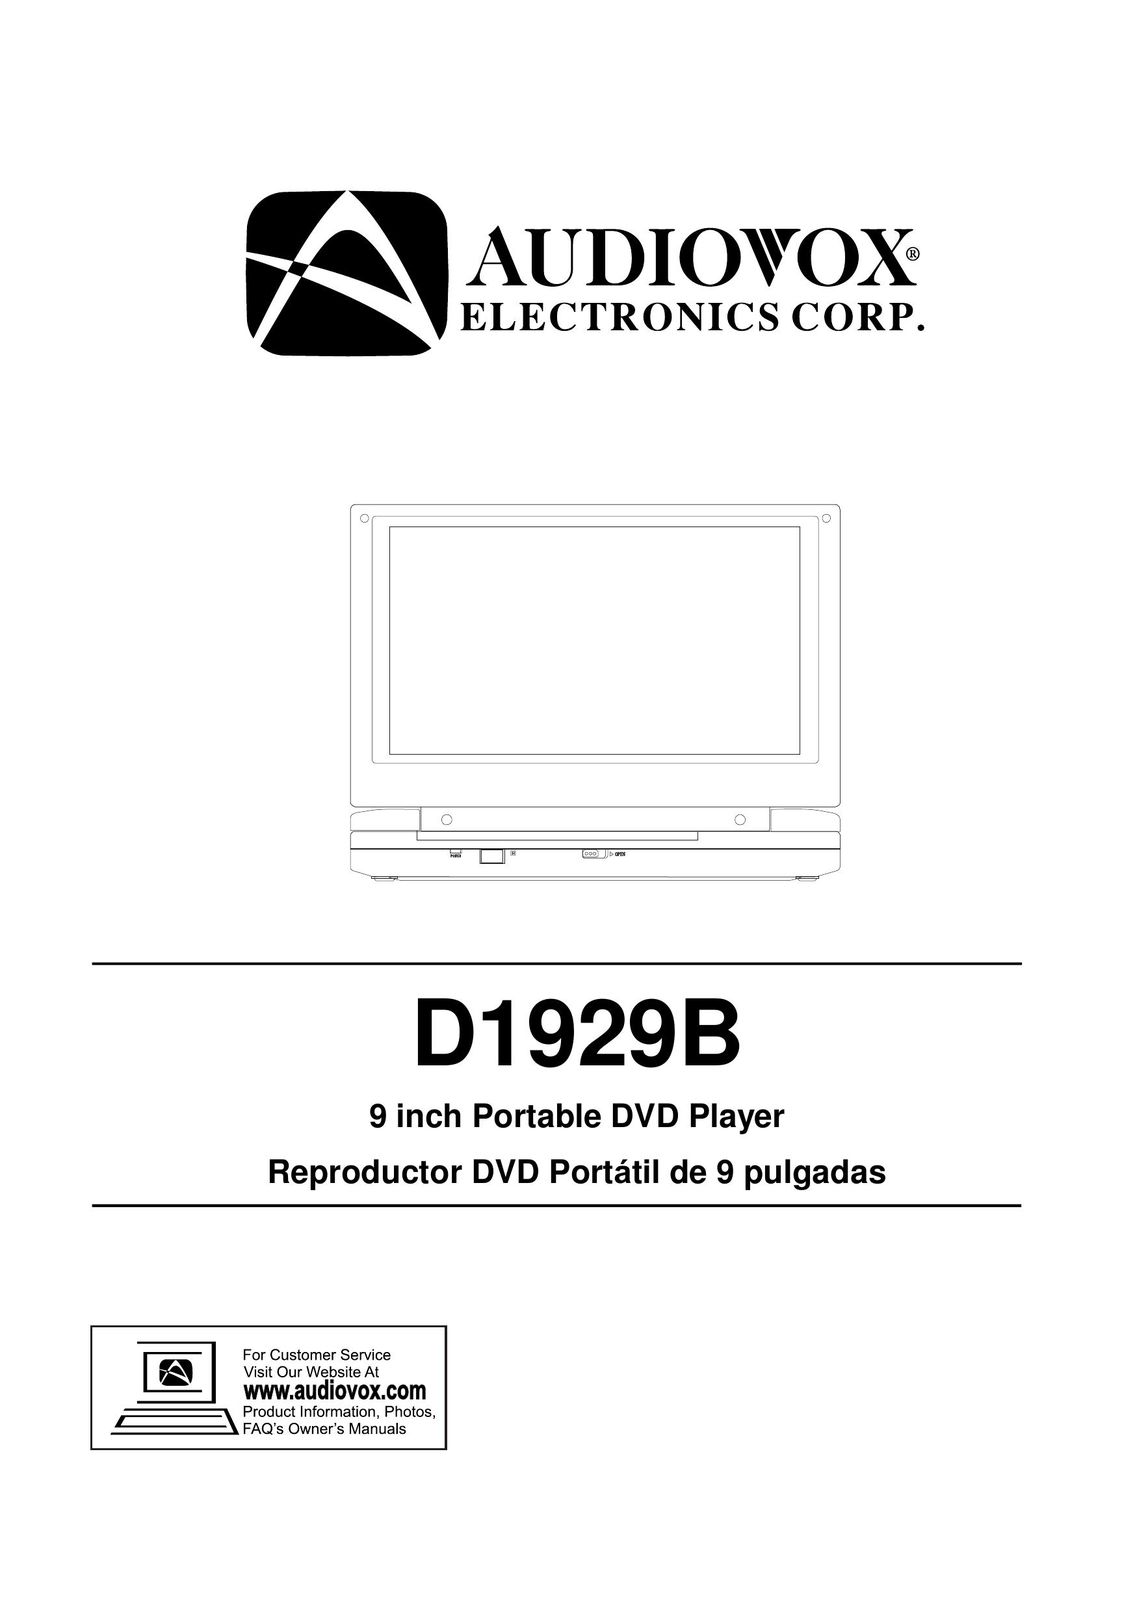 Audiovox D1929B Portable DVD Player User Manual